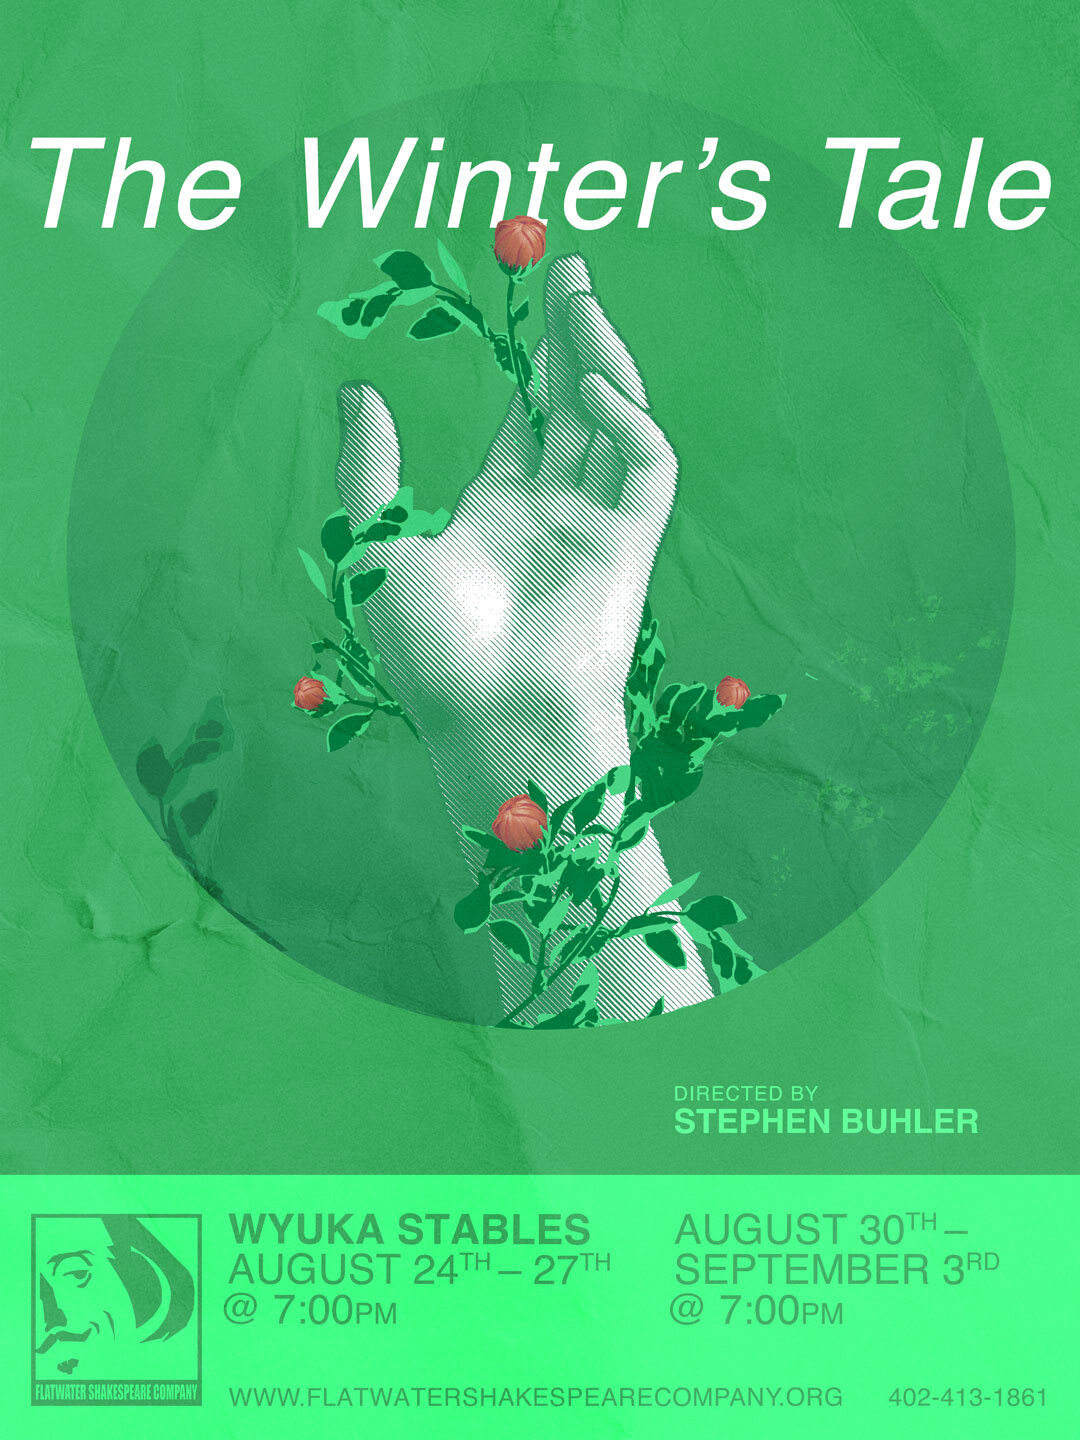 9/2 SEN - SENIOR (65+): Sat. September 2, 2023 | 7:00 p.m. - 10:00 p.m. CST | Wyuka Stables (The Winter's Tale)